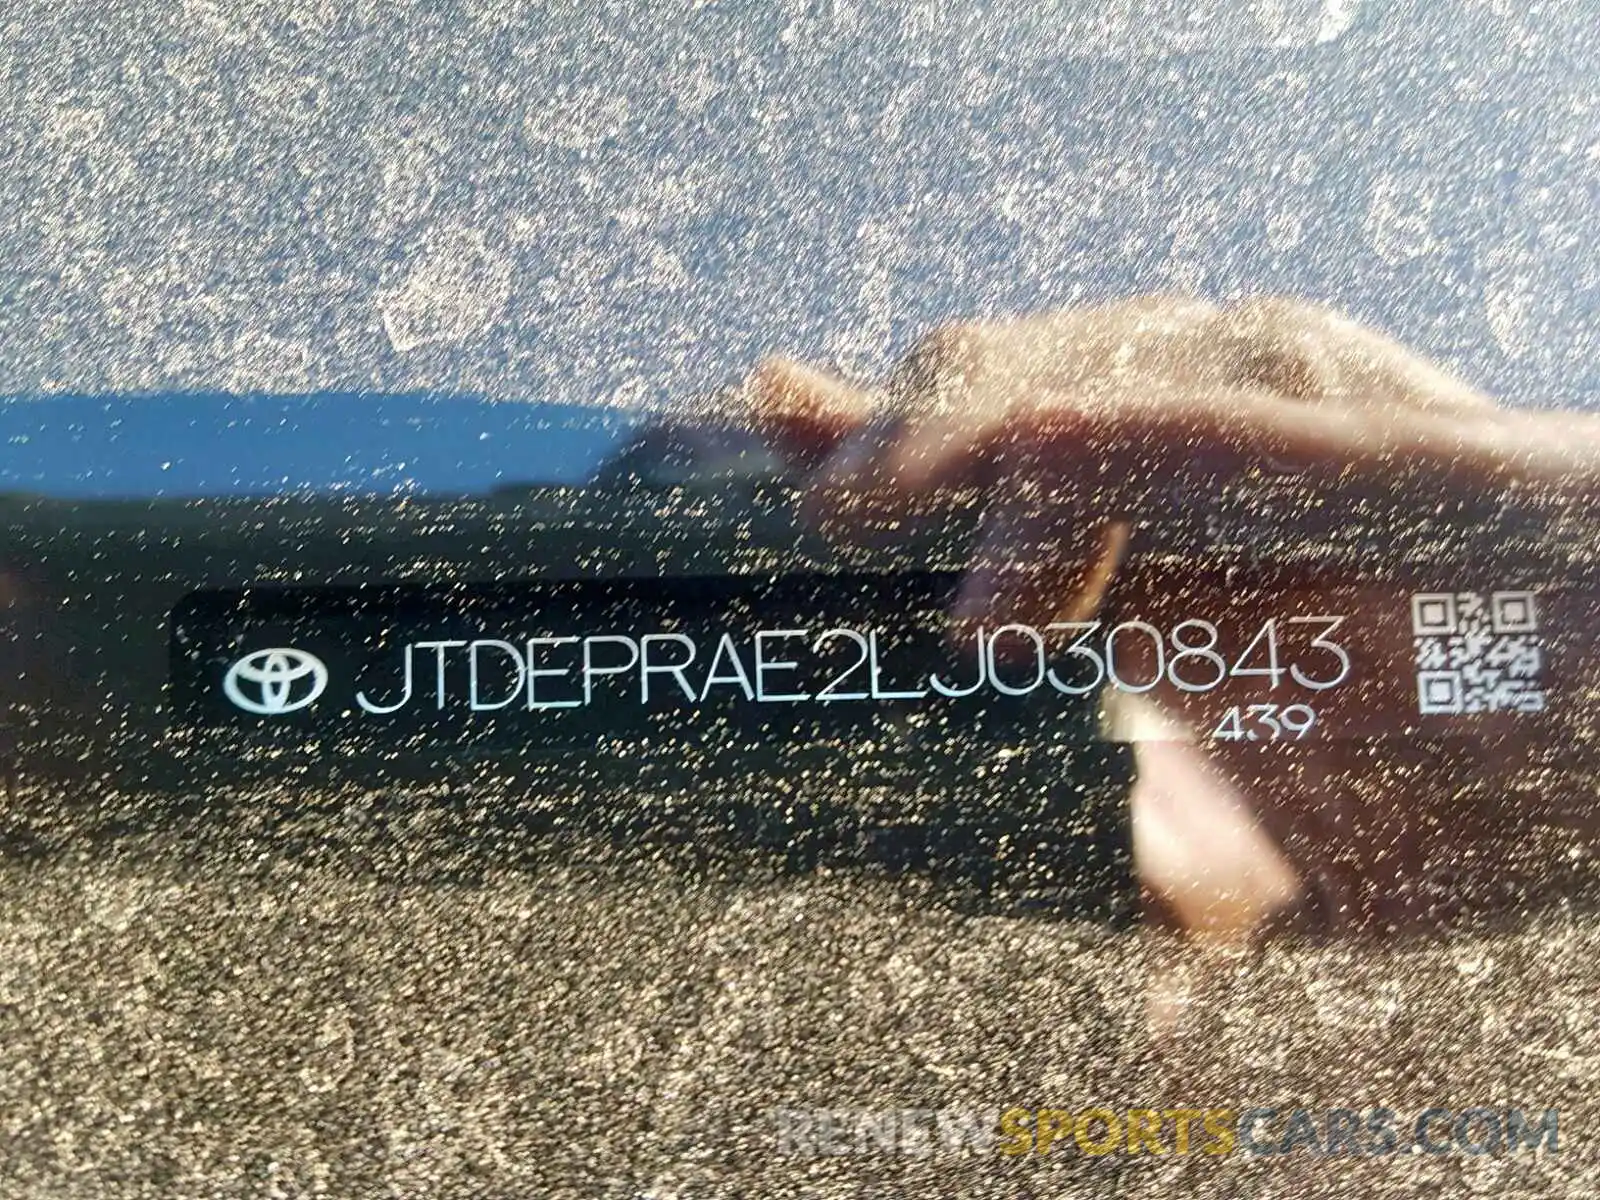 10 Photograph of a damaged car JTDEPRAE2LJ030843 TOYOTA COROLLA 2020